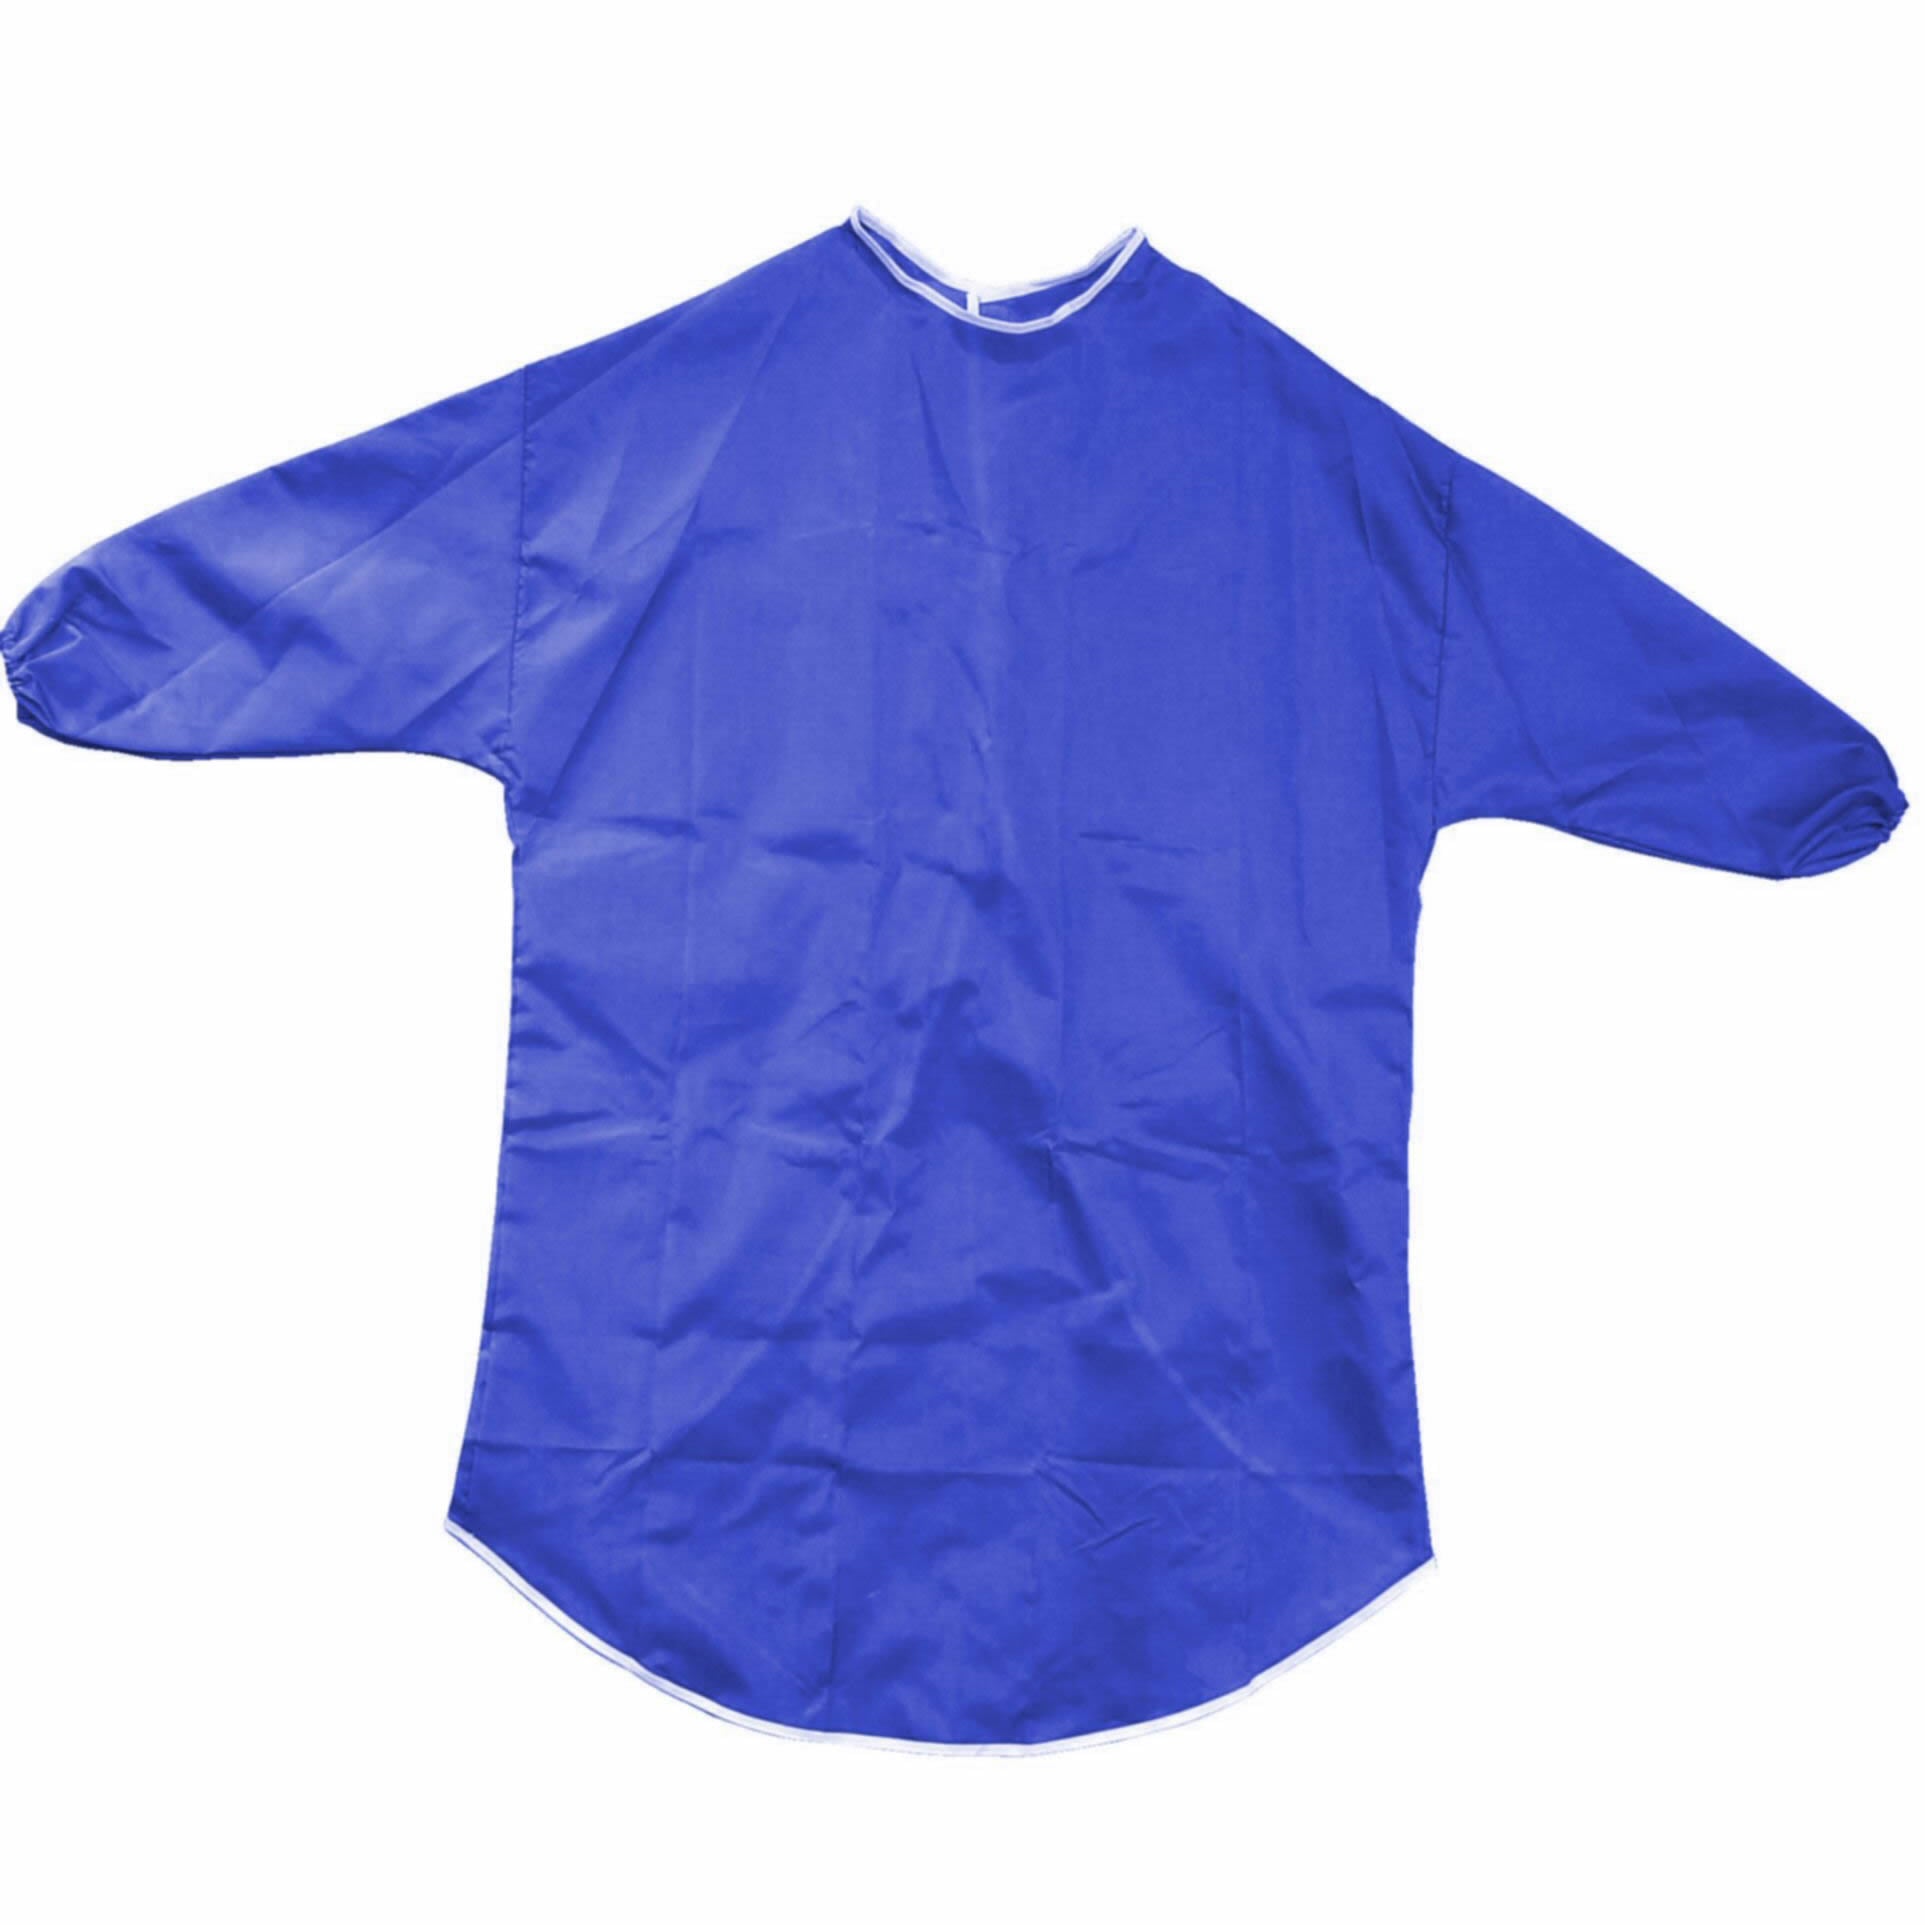 Children's blue art apron